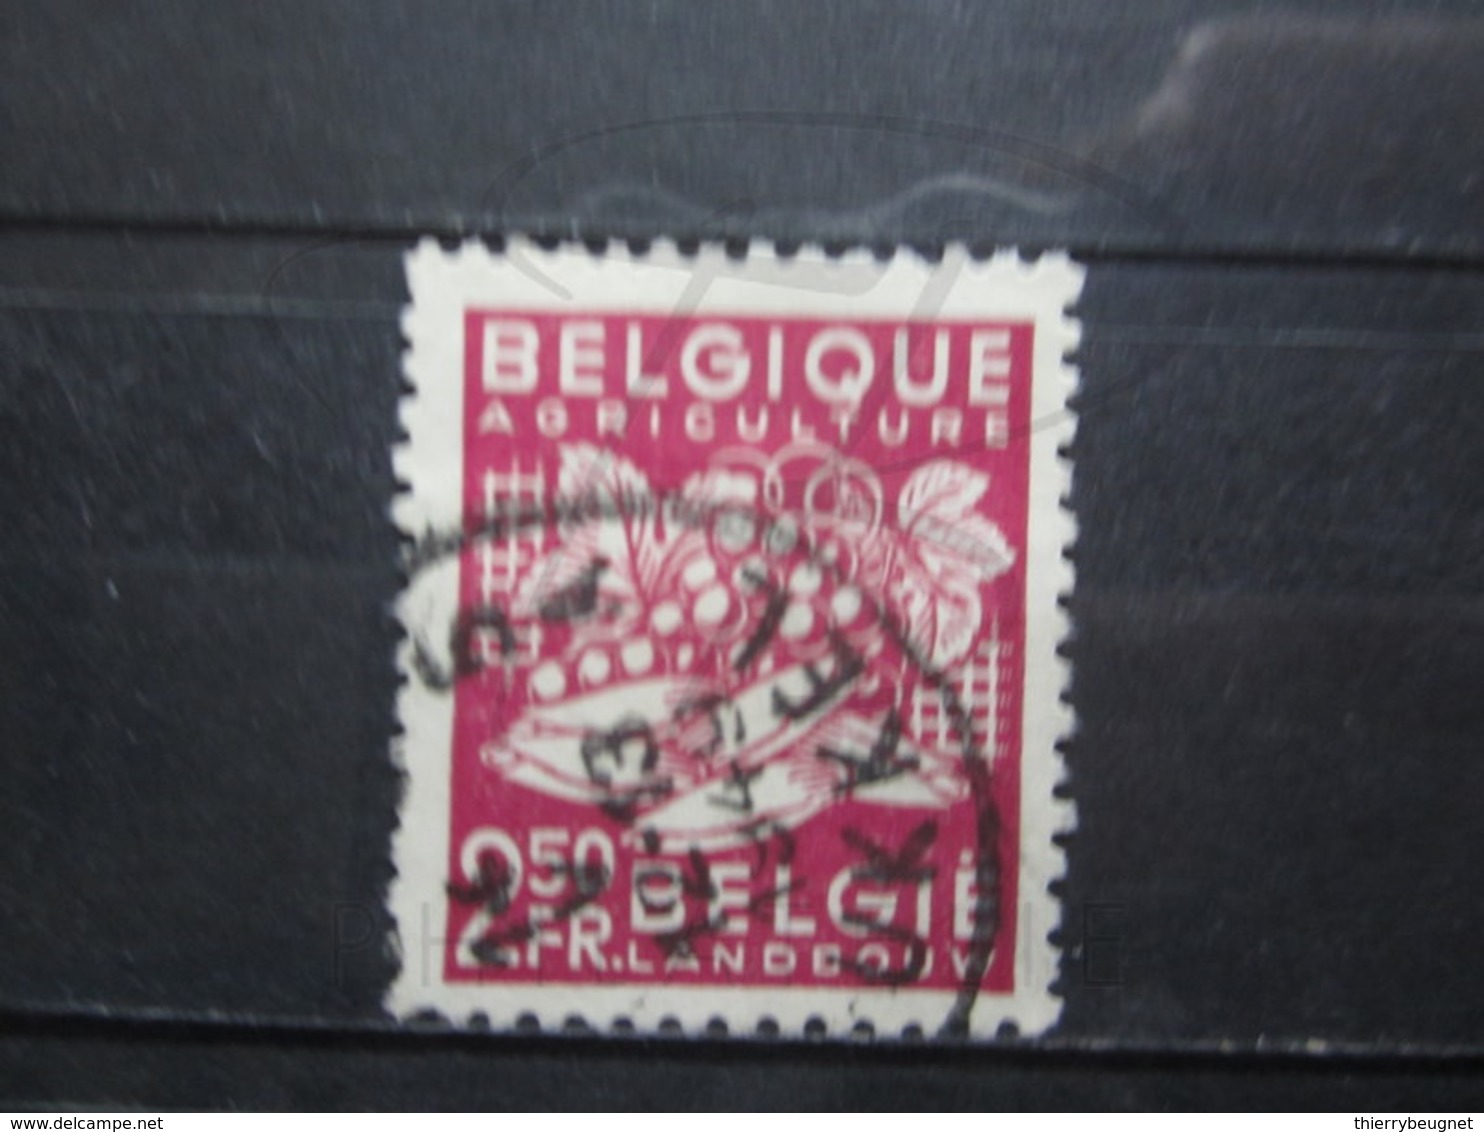 VEND BEAU TIMBRE DE BELGIQUE N° 767 , OBLITERATION " UKKEL " !!! - 1948 Exportación